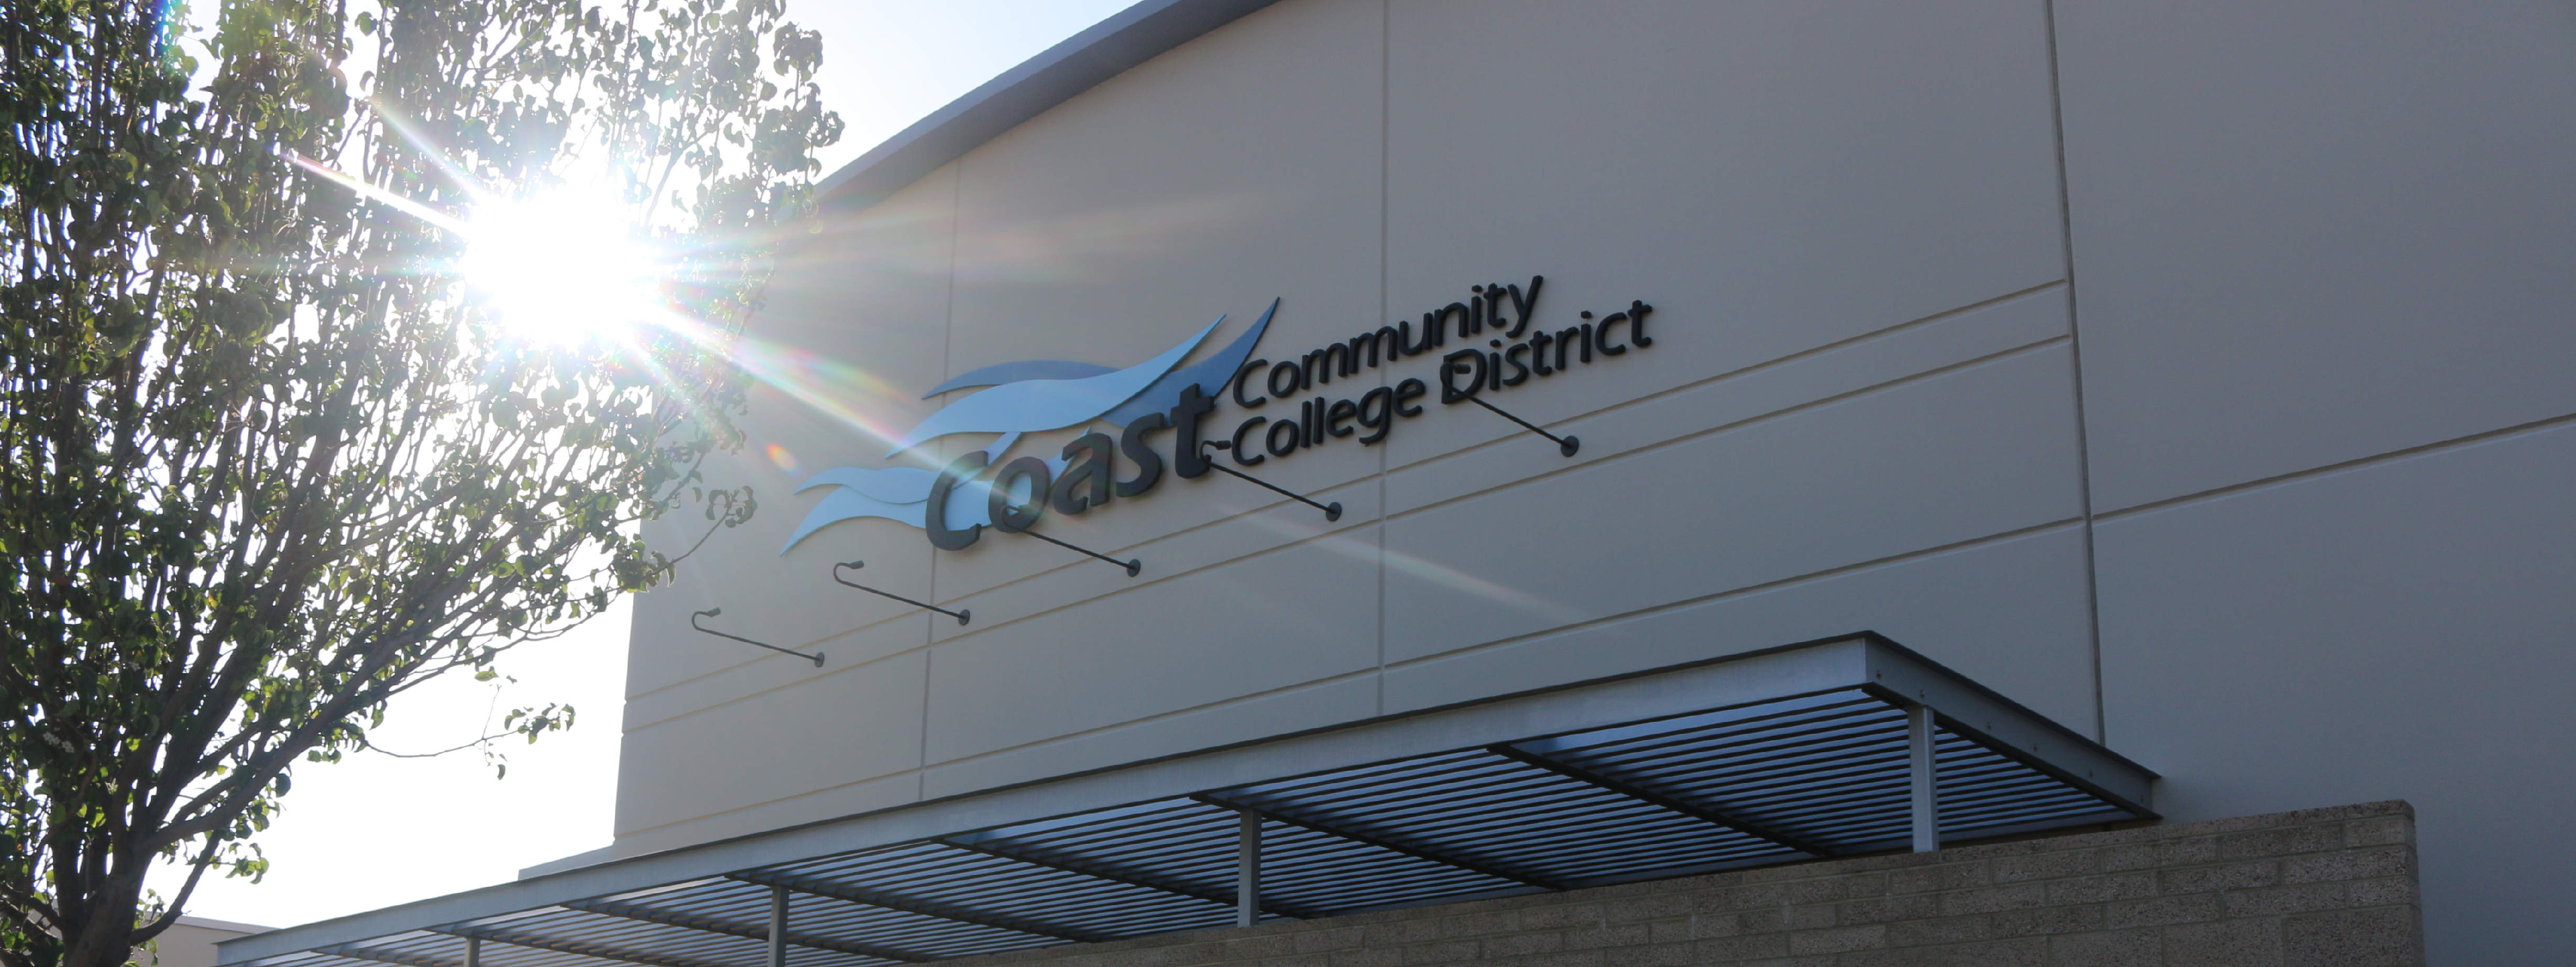 Coast District Appoints Elizabeth Dorn Parker as Trustee for Area 5